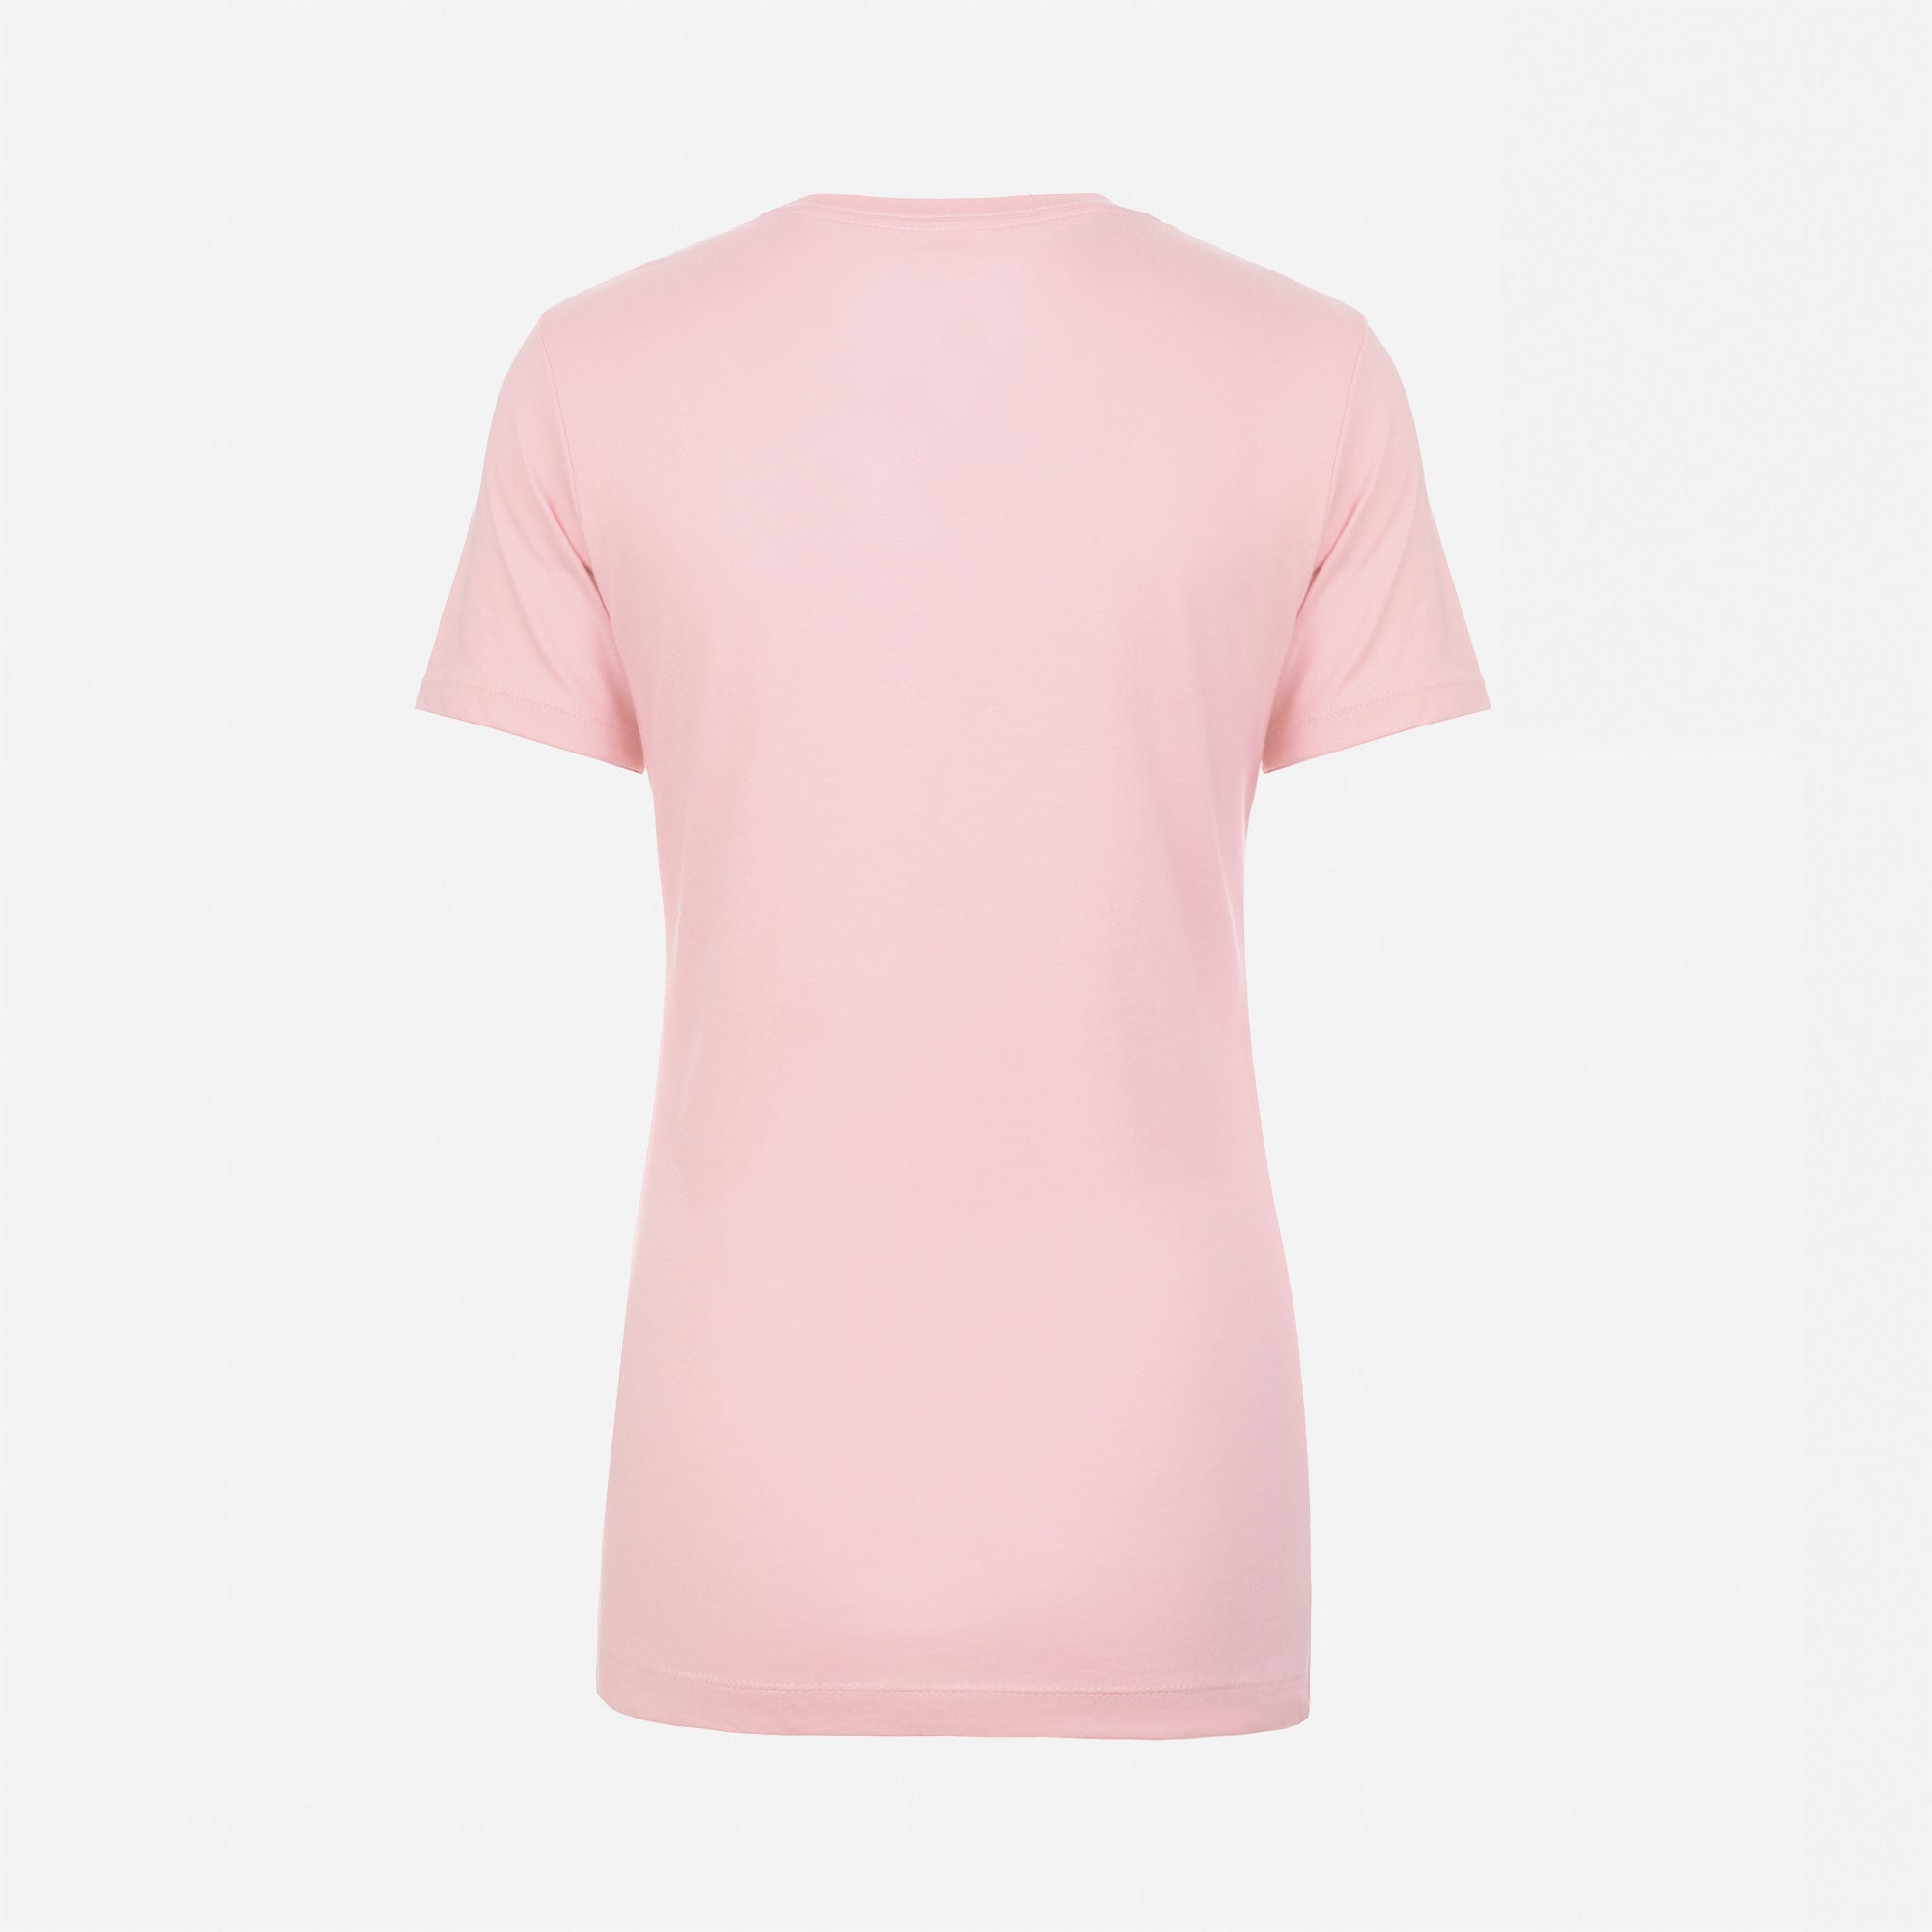 Cotton Boyfriend T-Shirt Light Pink 3900 Next Level Apparel Sample Womens Back View